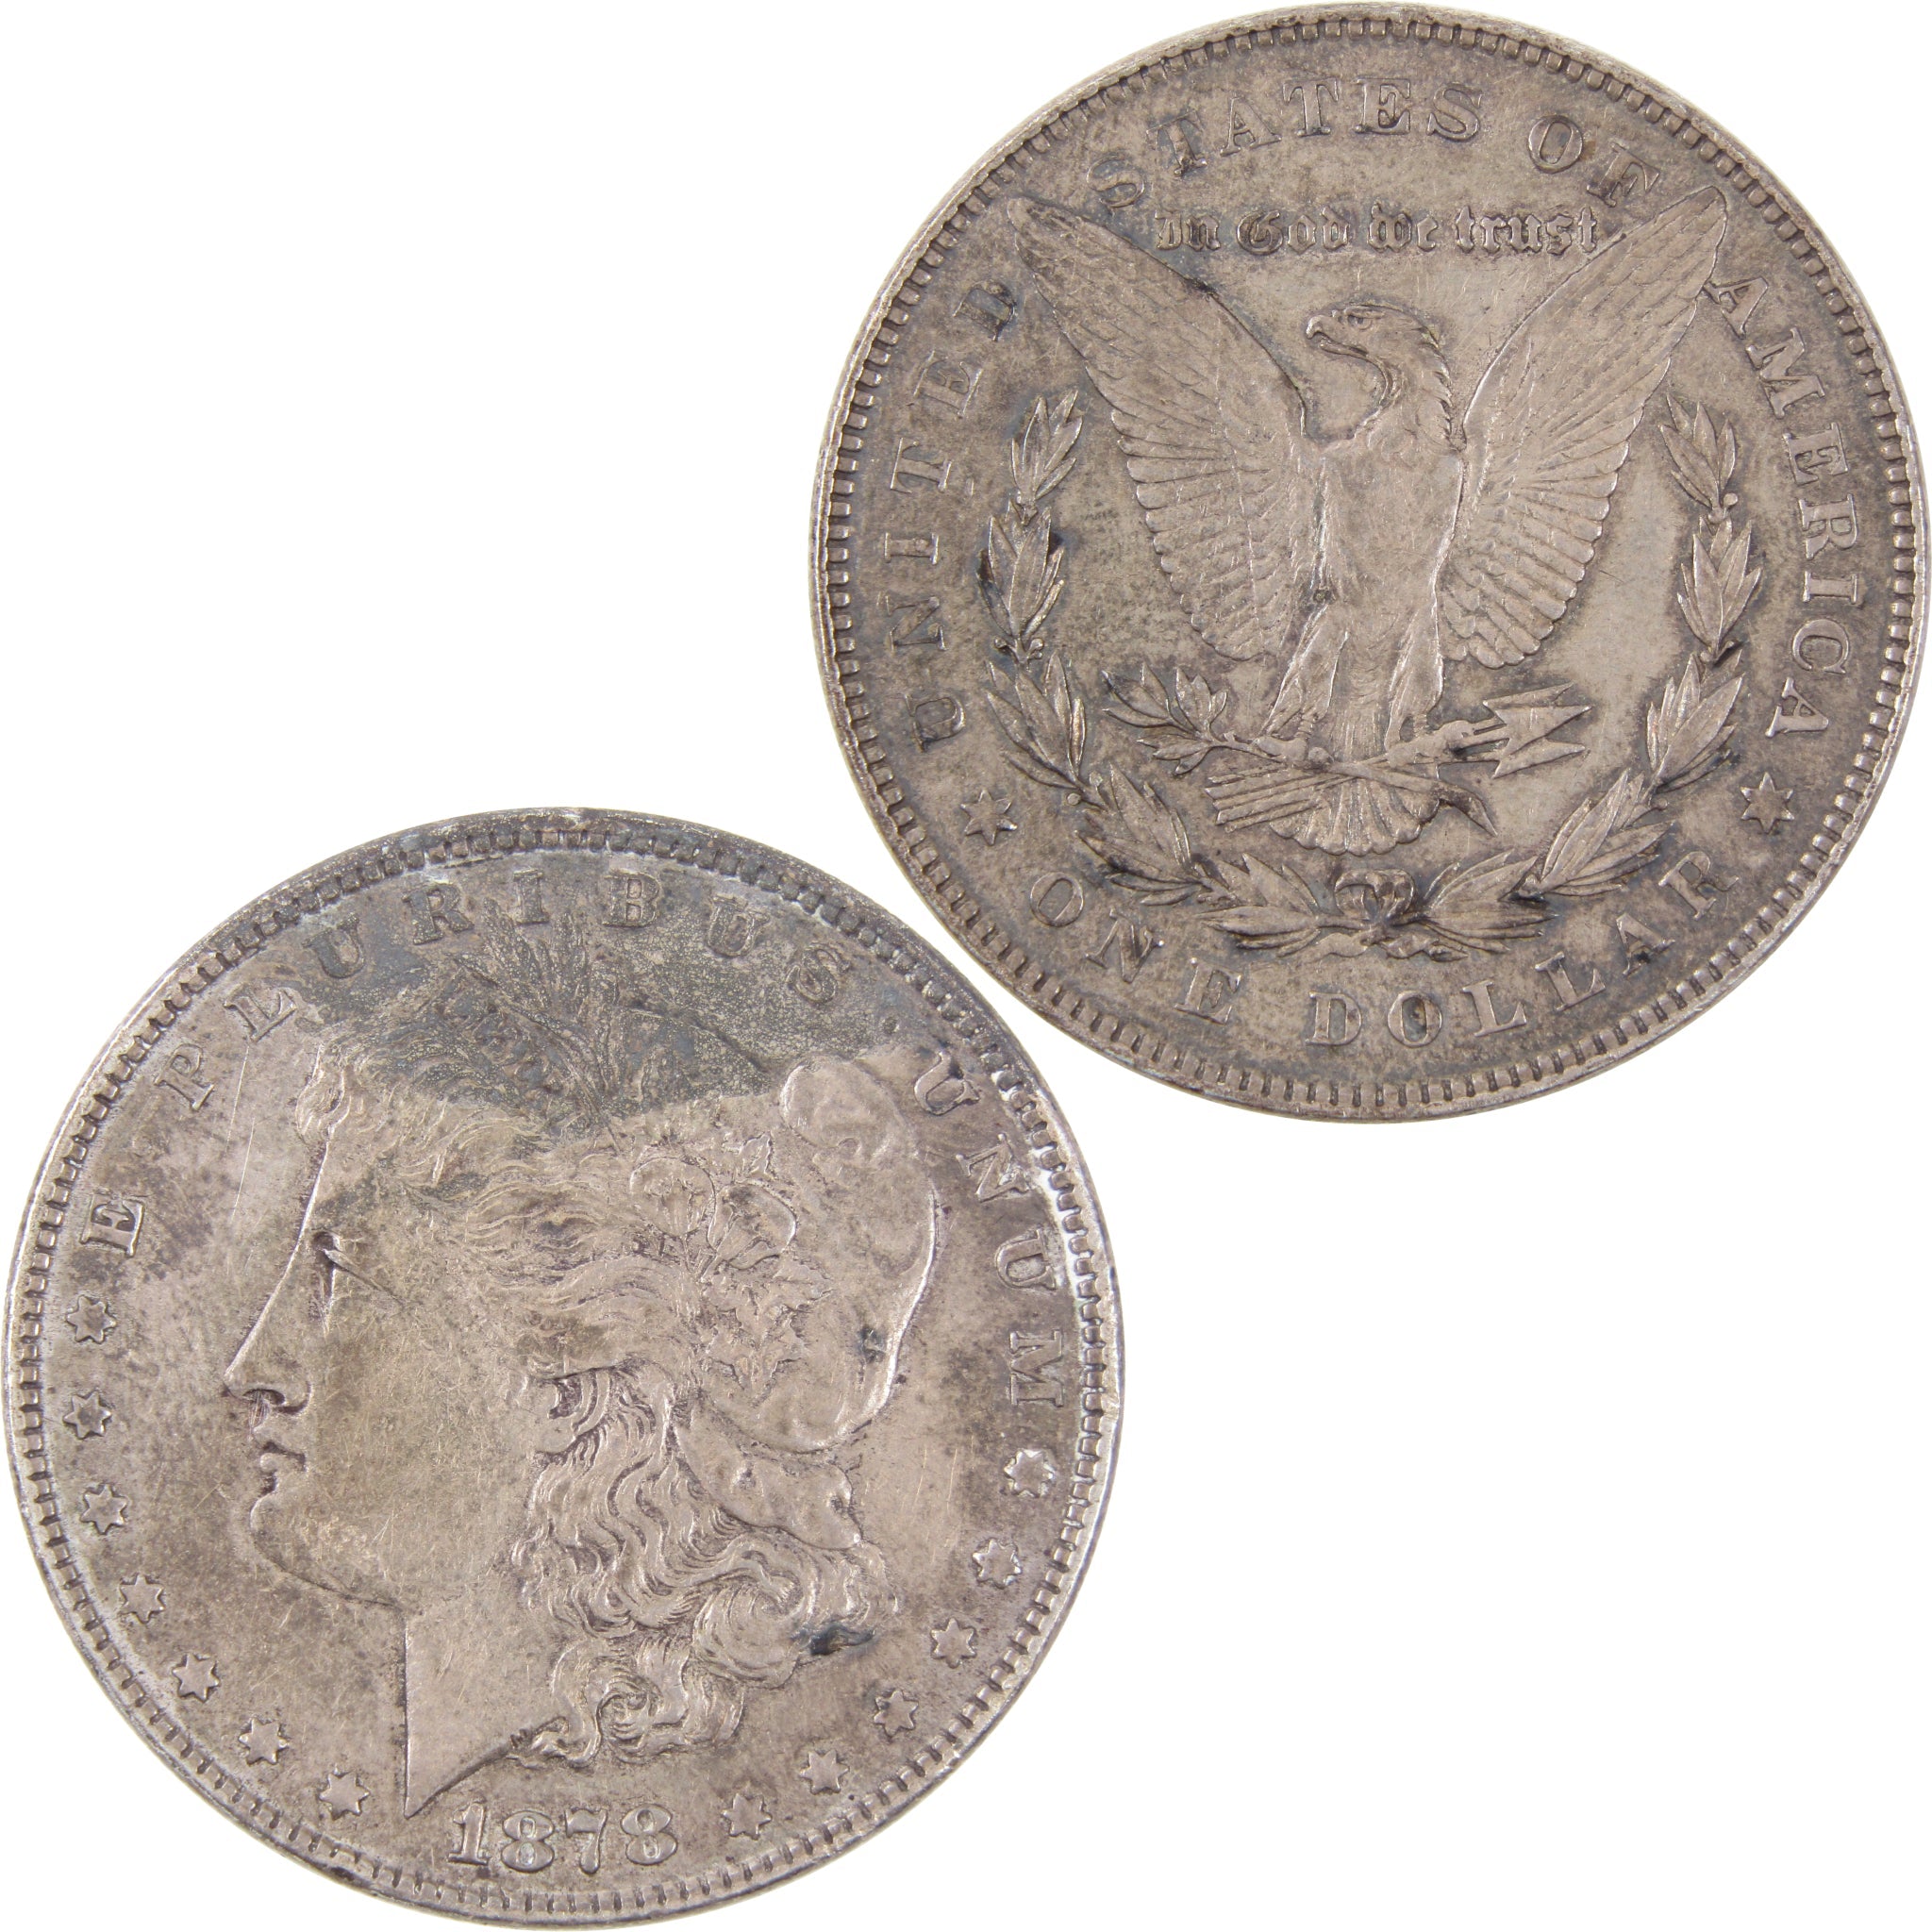 1878 7TF Rev 78 Morgan Dollar VF Very Fine 90% Silver SKU:I2554 - Morgan coin - Morgan silver dollar - Morgan silver dollar for sale - Profile Coins &amp; Collectibles